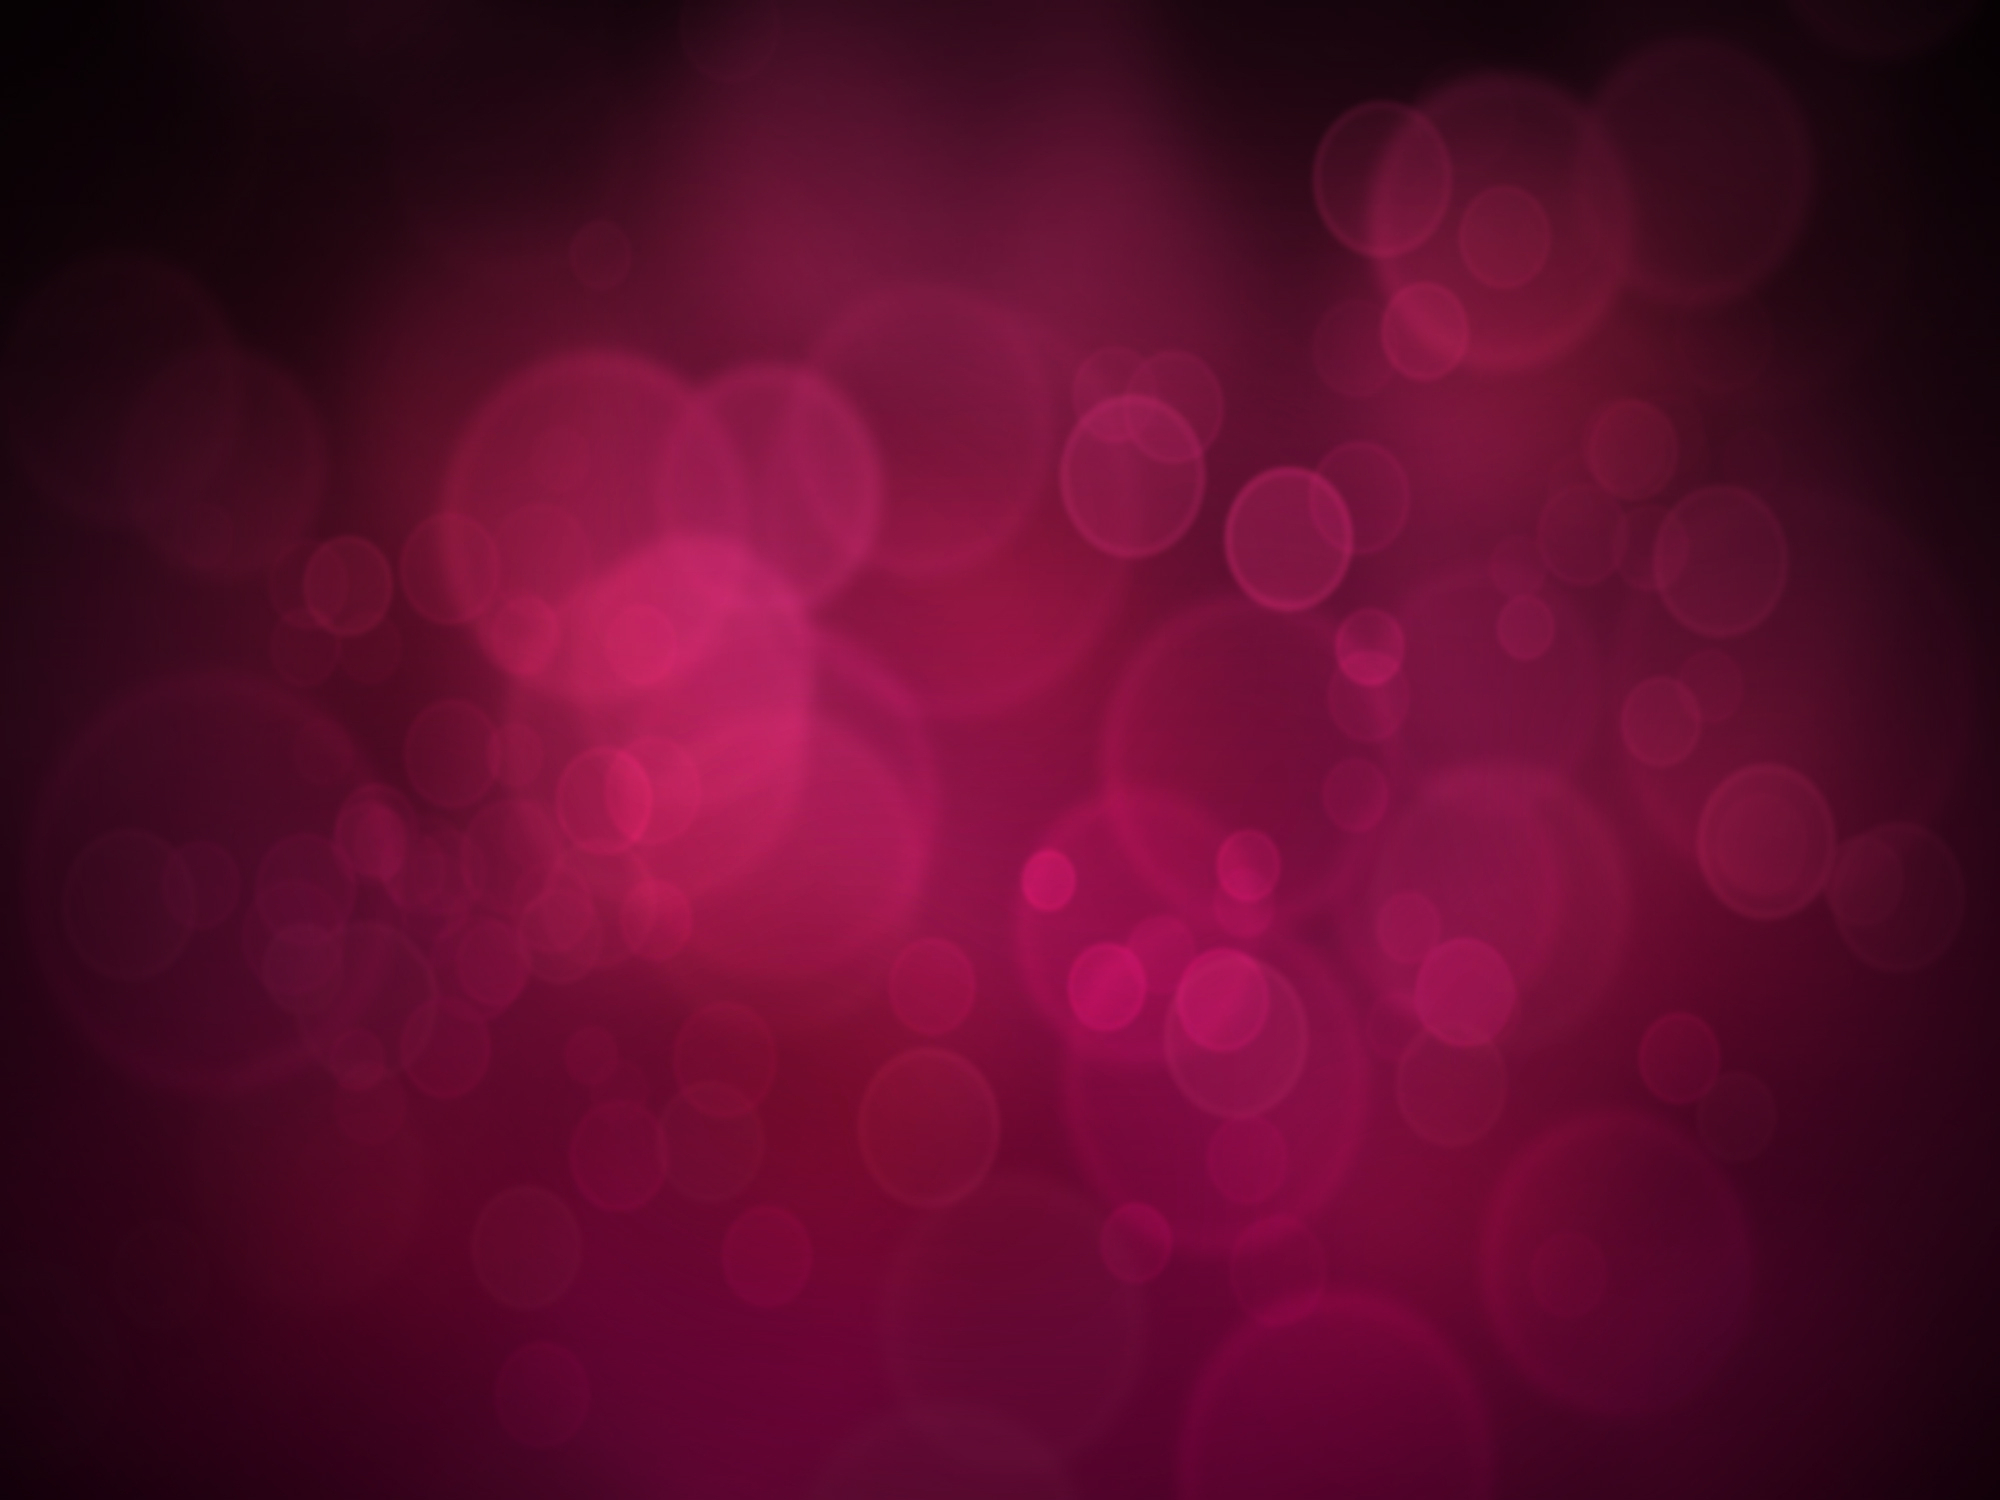  Pink  And Black  Desktop  Backgrounds  PixelsTalk Net